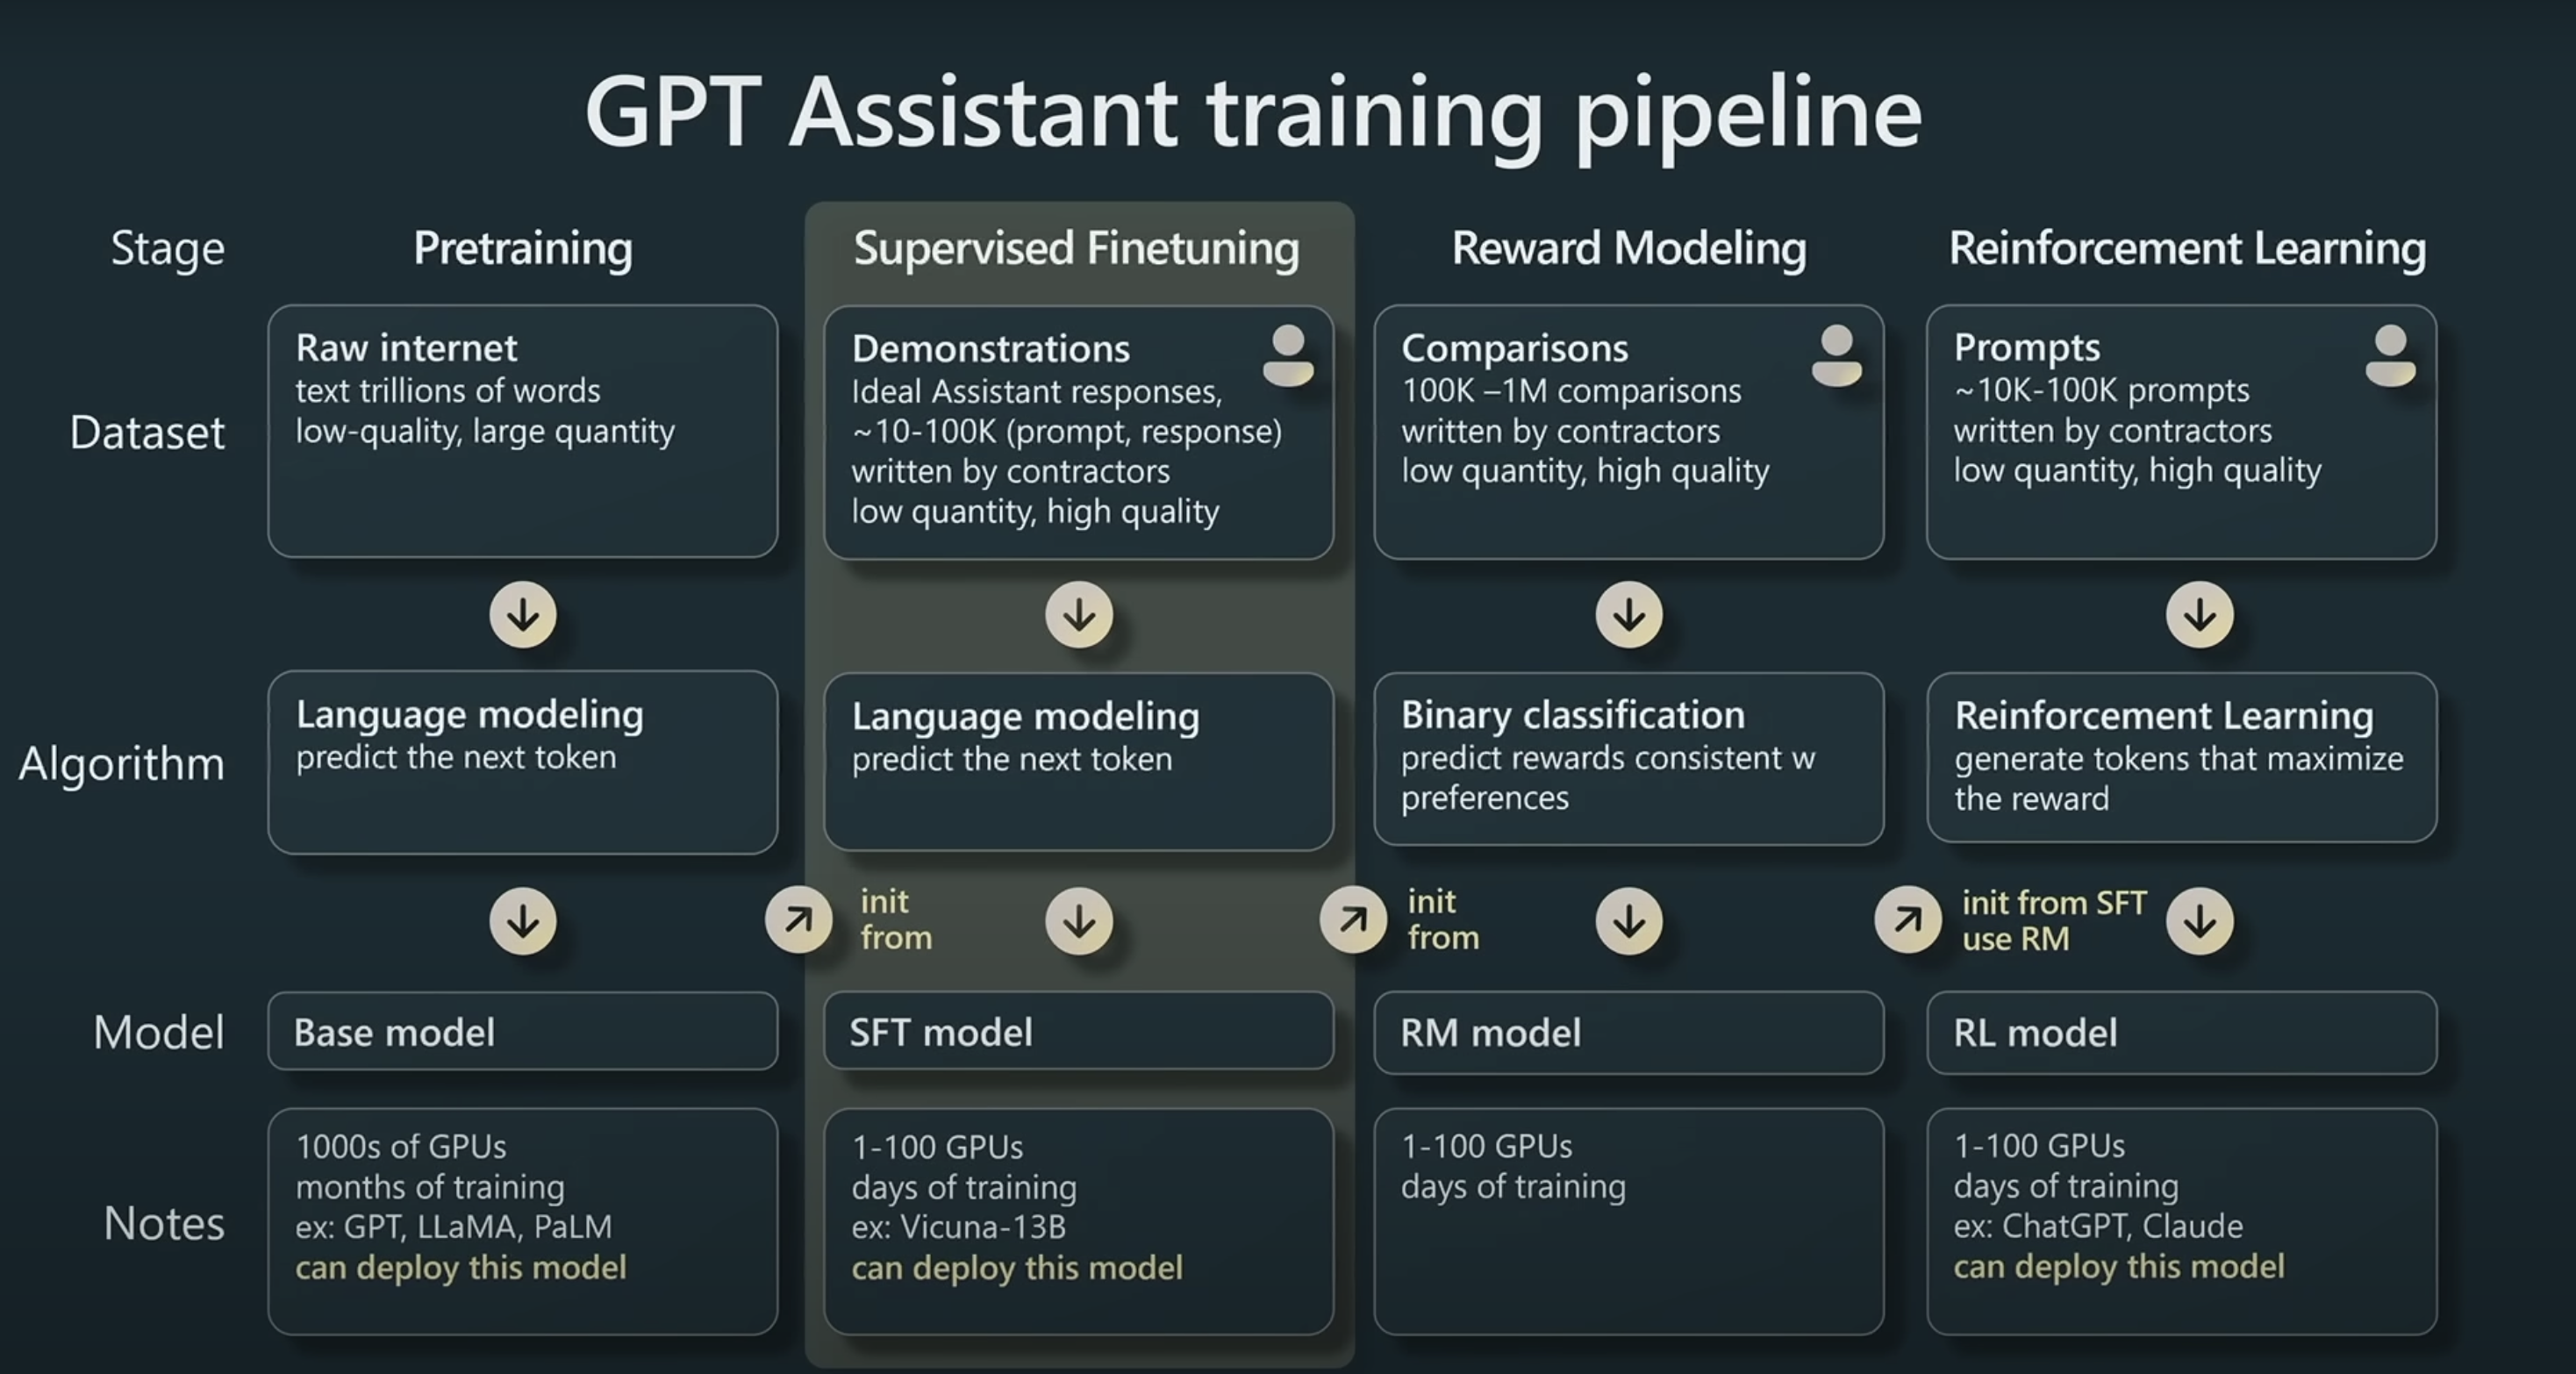 training_pipeline